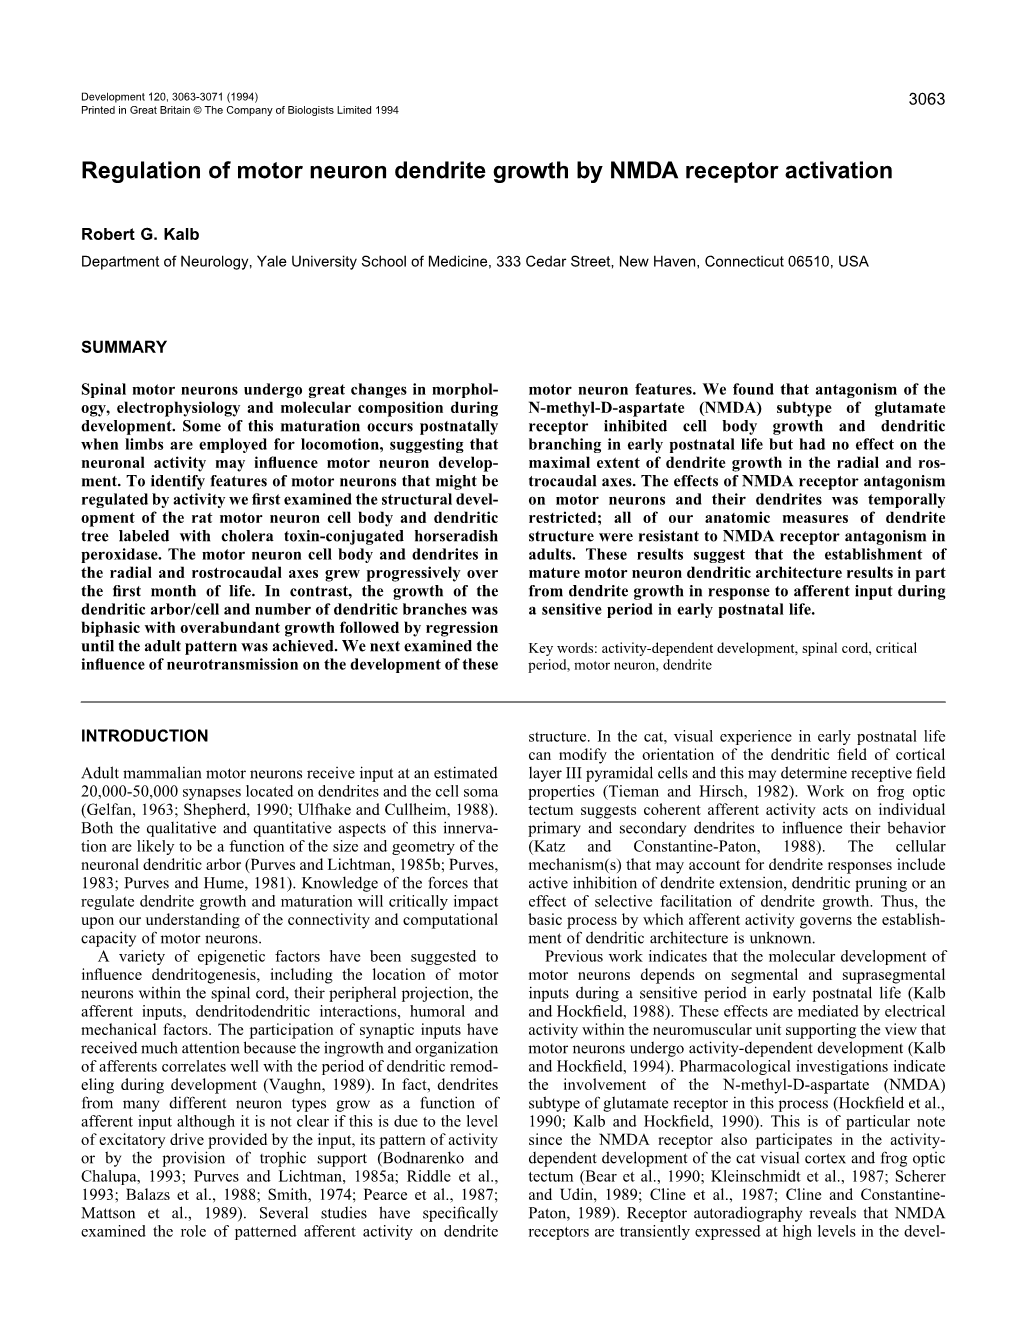 Regulation of Motor Neuron Dendrite Growth by NMDA Receptor Activation